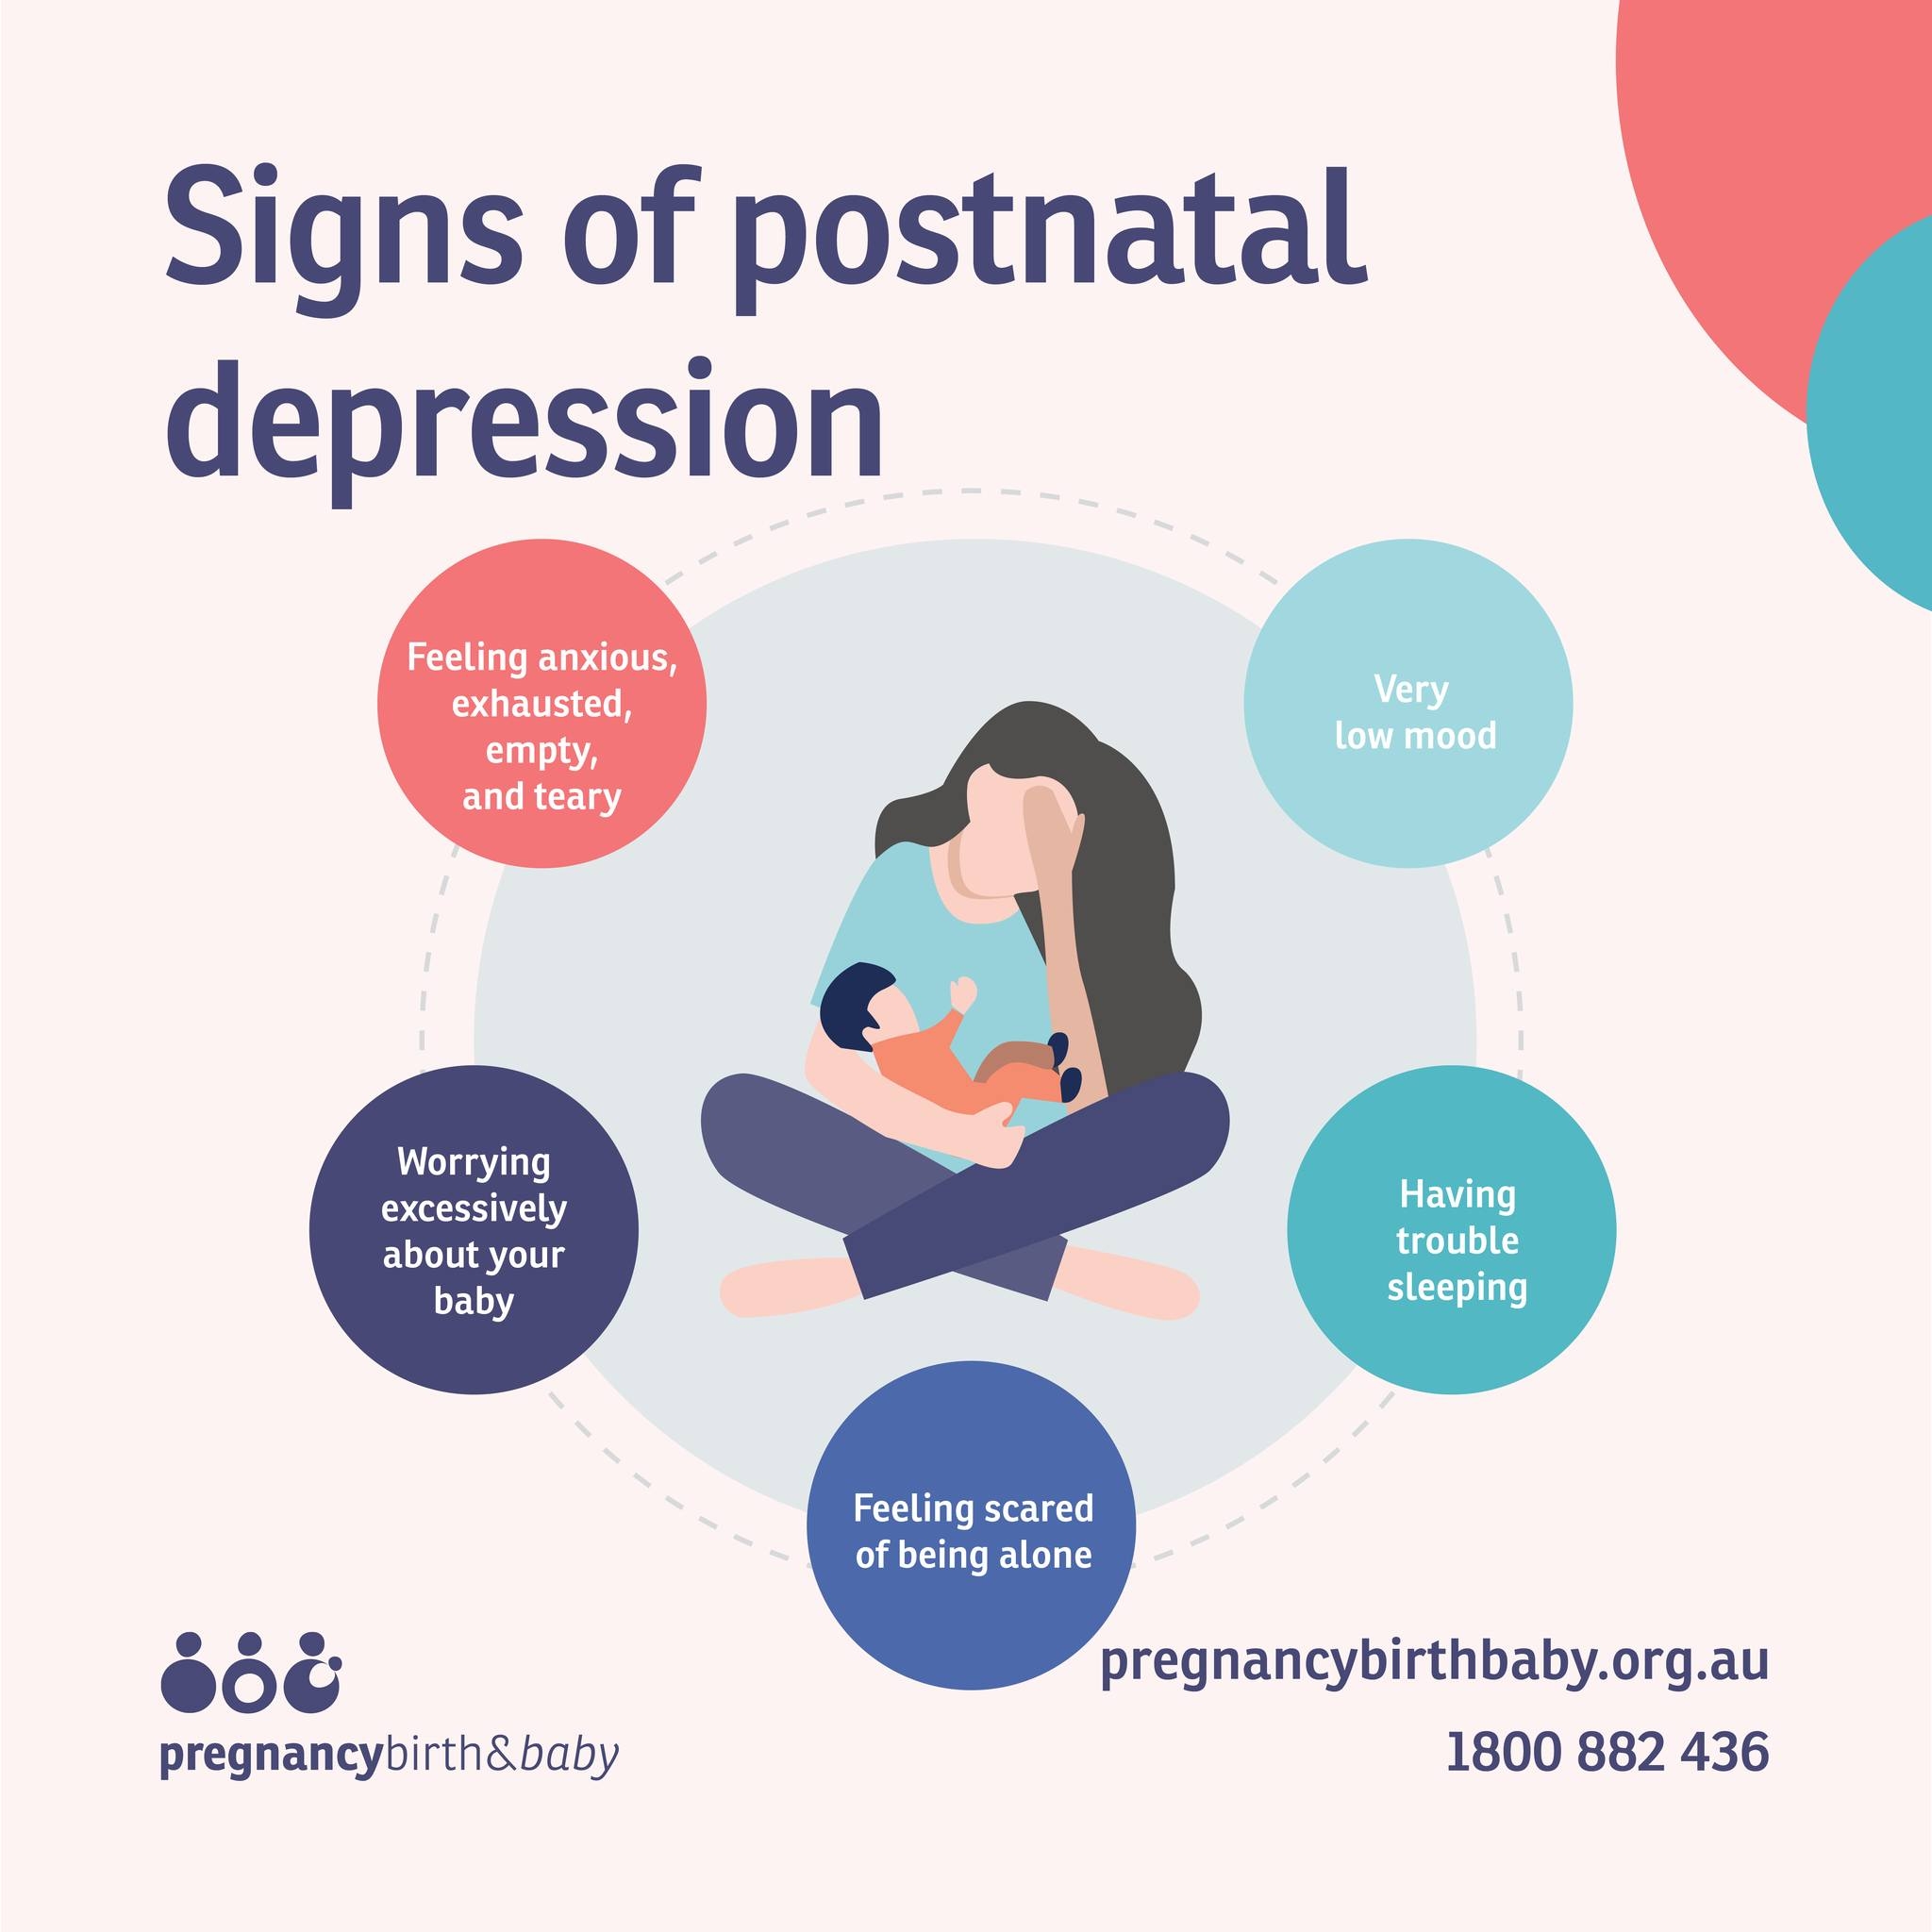 Signs of postnatal depression